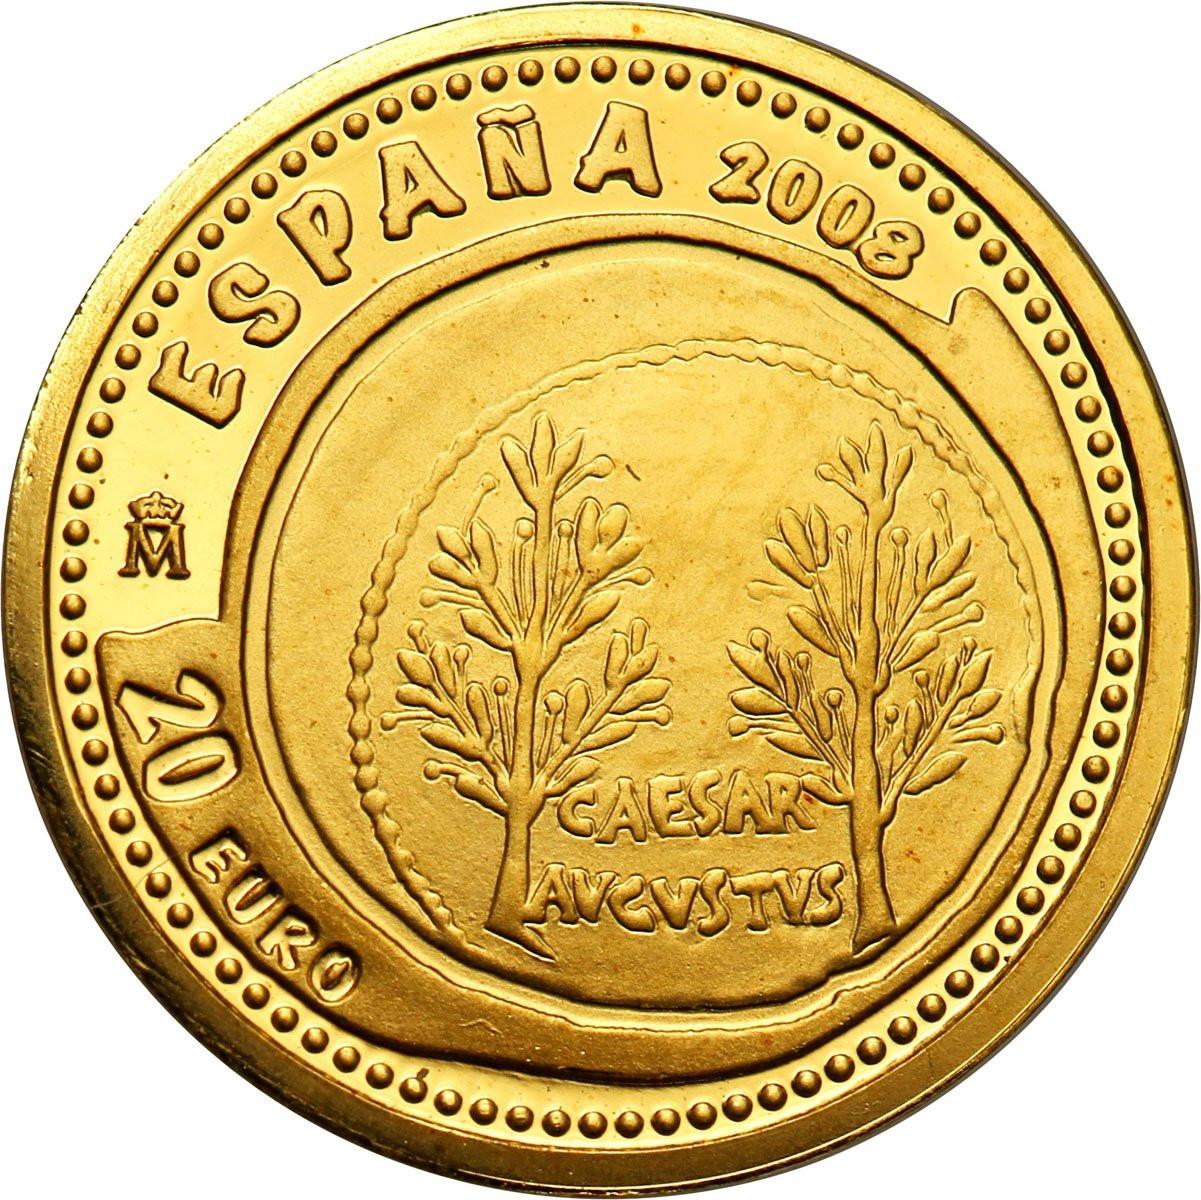 Hiszpania. 20 euro 2008 Replika Auresua Oktawiana Augusta - złoto